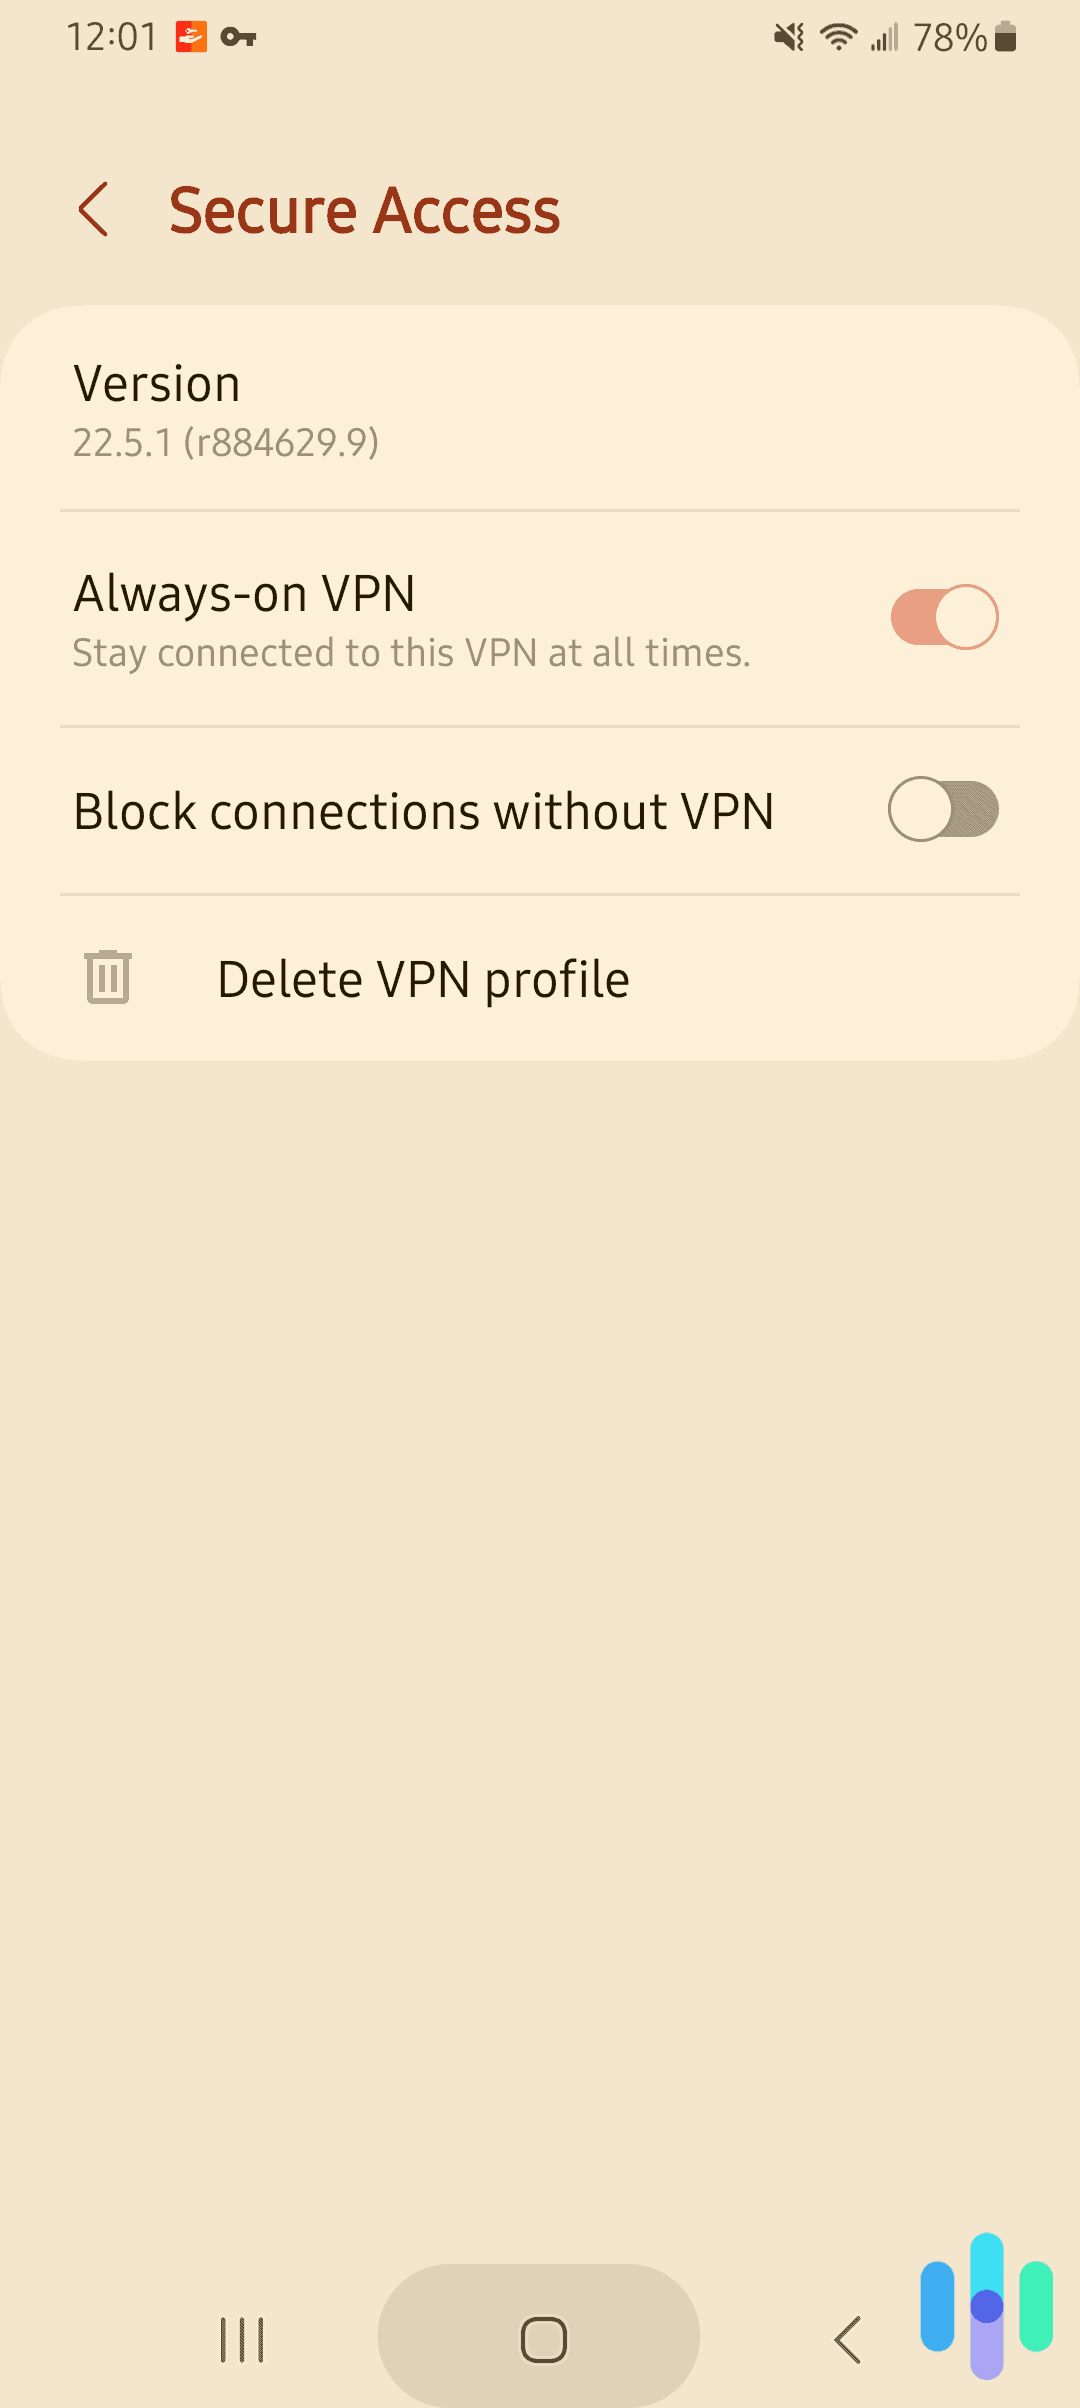 Enabling Android Always On VPN